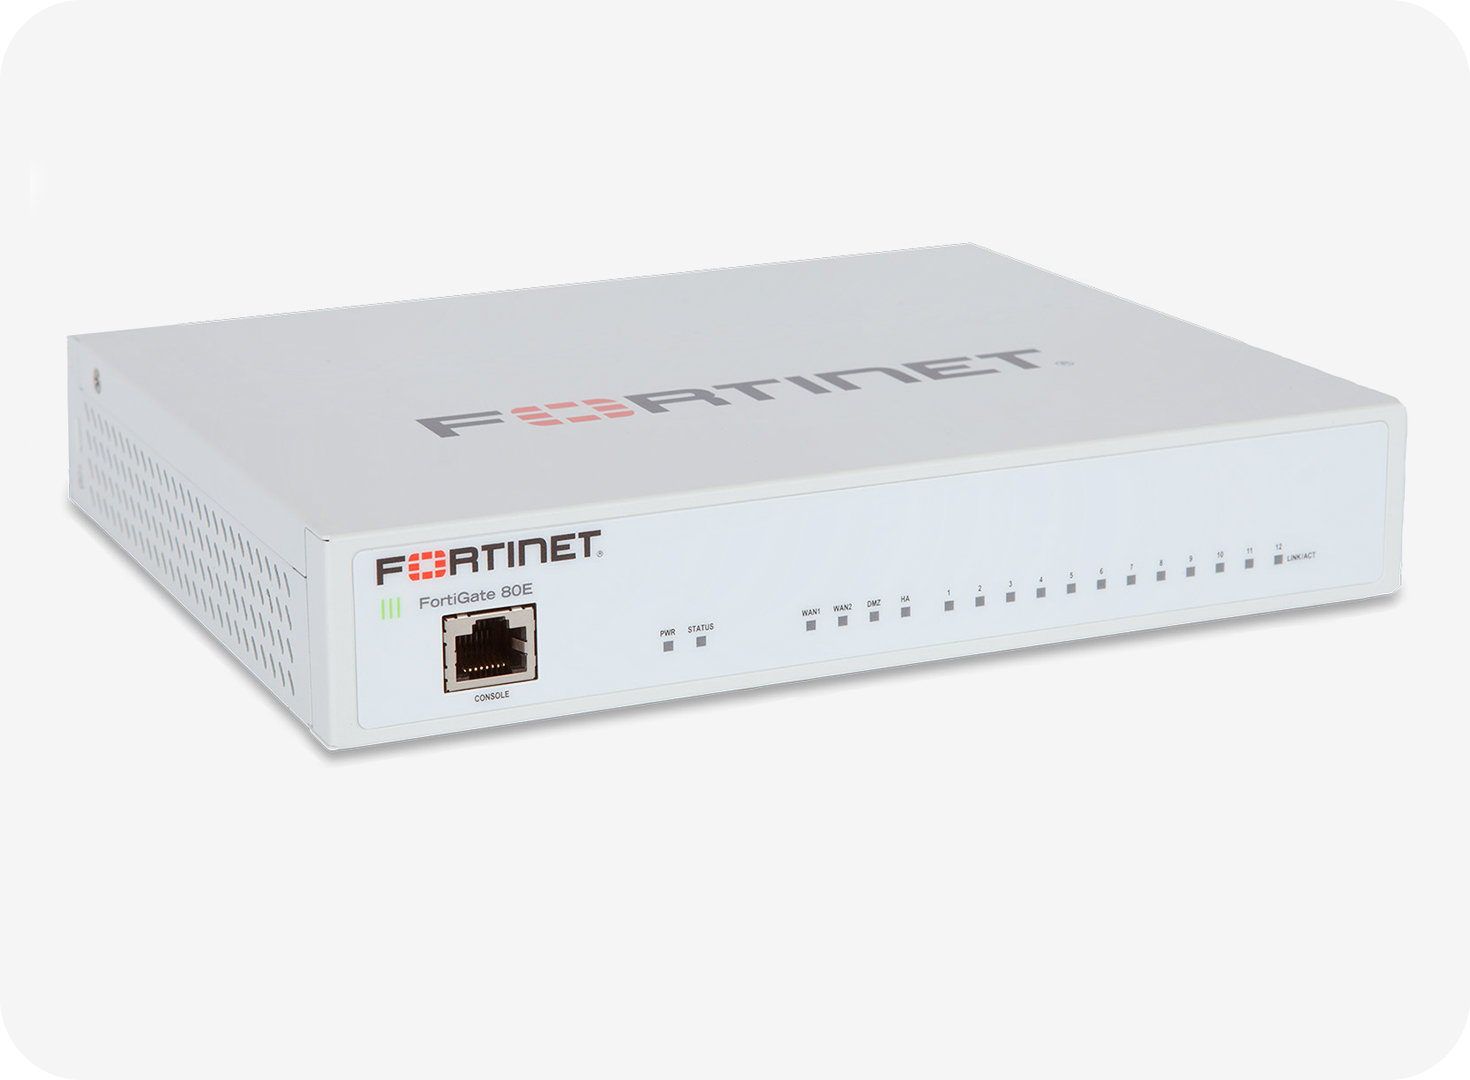 Buy FortiGate 80E Firewall at Best Price in Dubai, Abu Dhabi, UAE